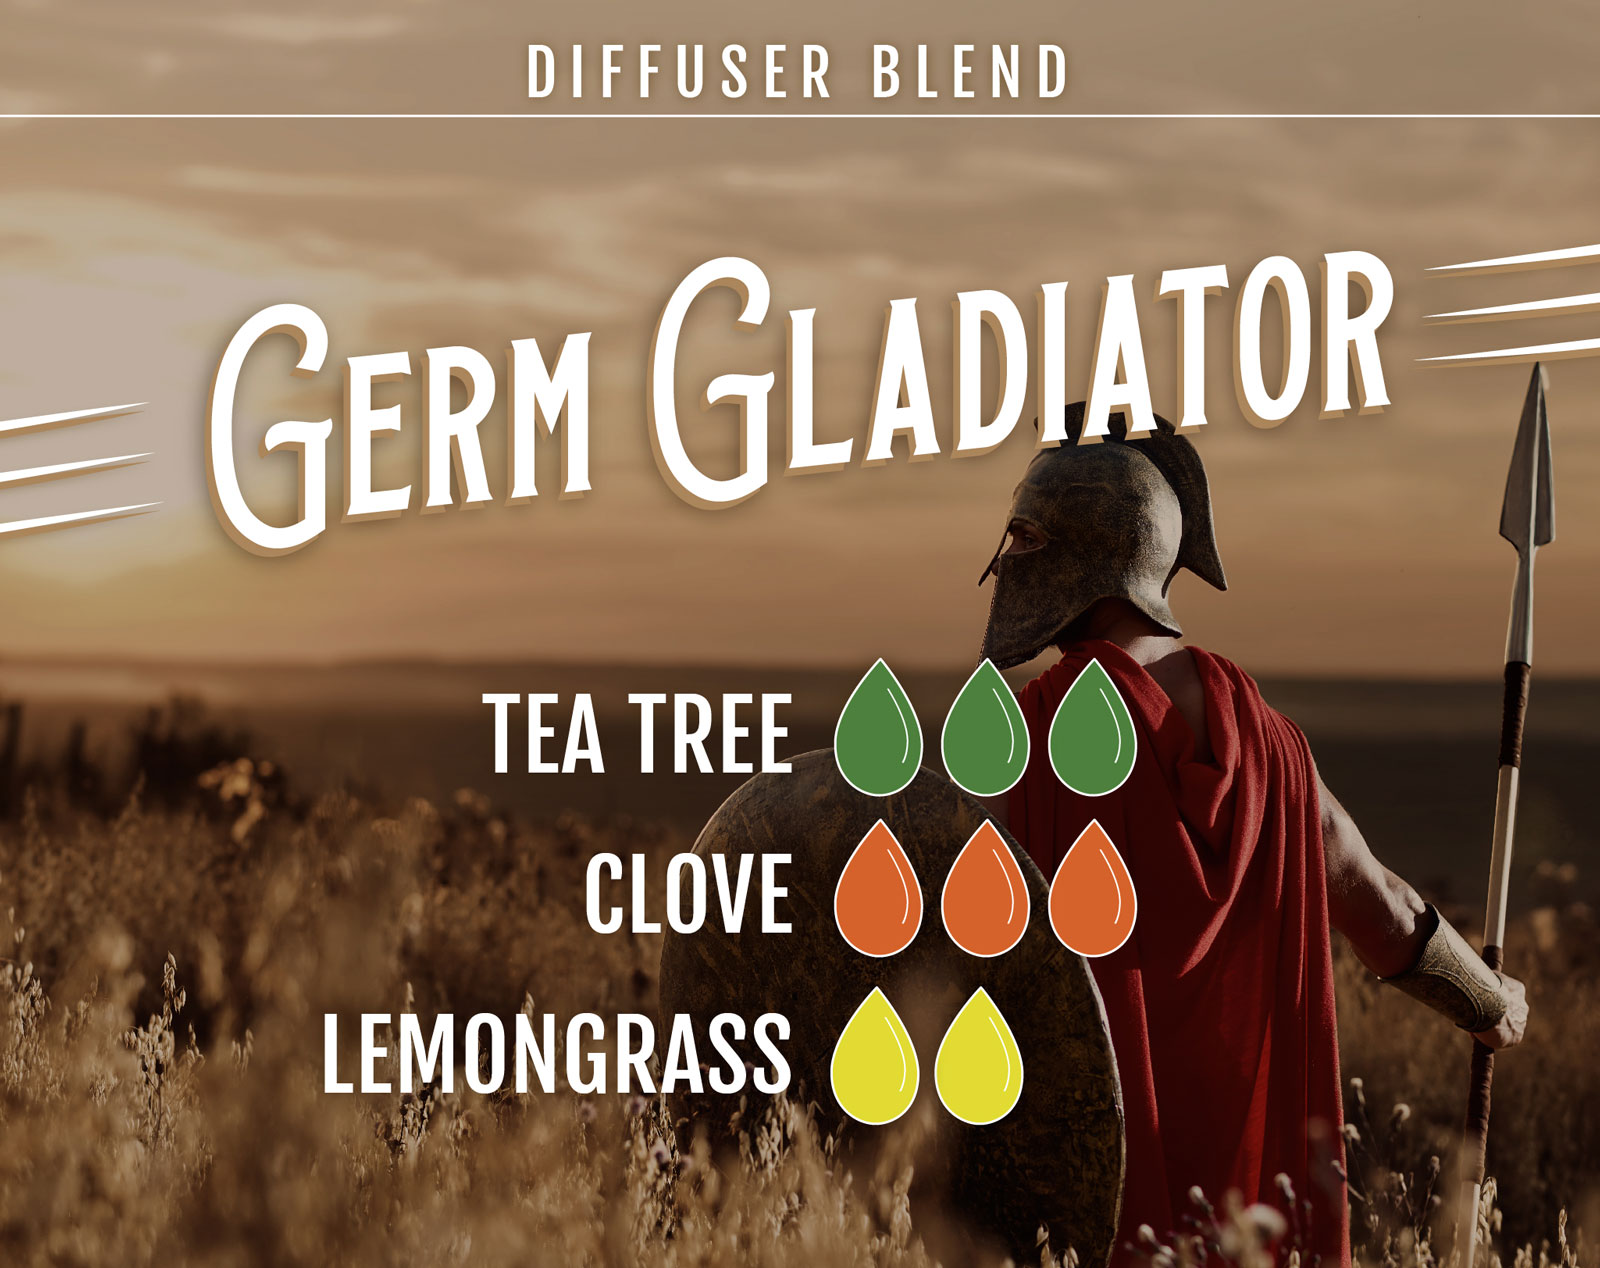 Tea Tree Essential Oil Diffuser Blend Germ Gladiator - 3 drops Tea Tree 3 drops Clove 2 drops Lemongrass